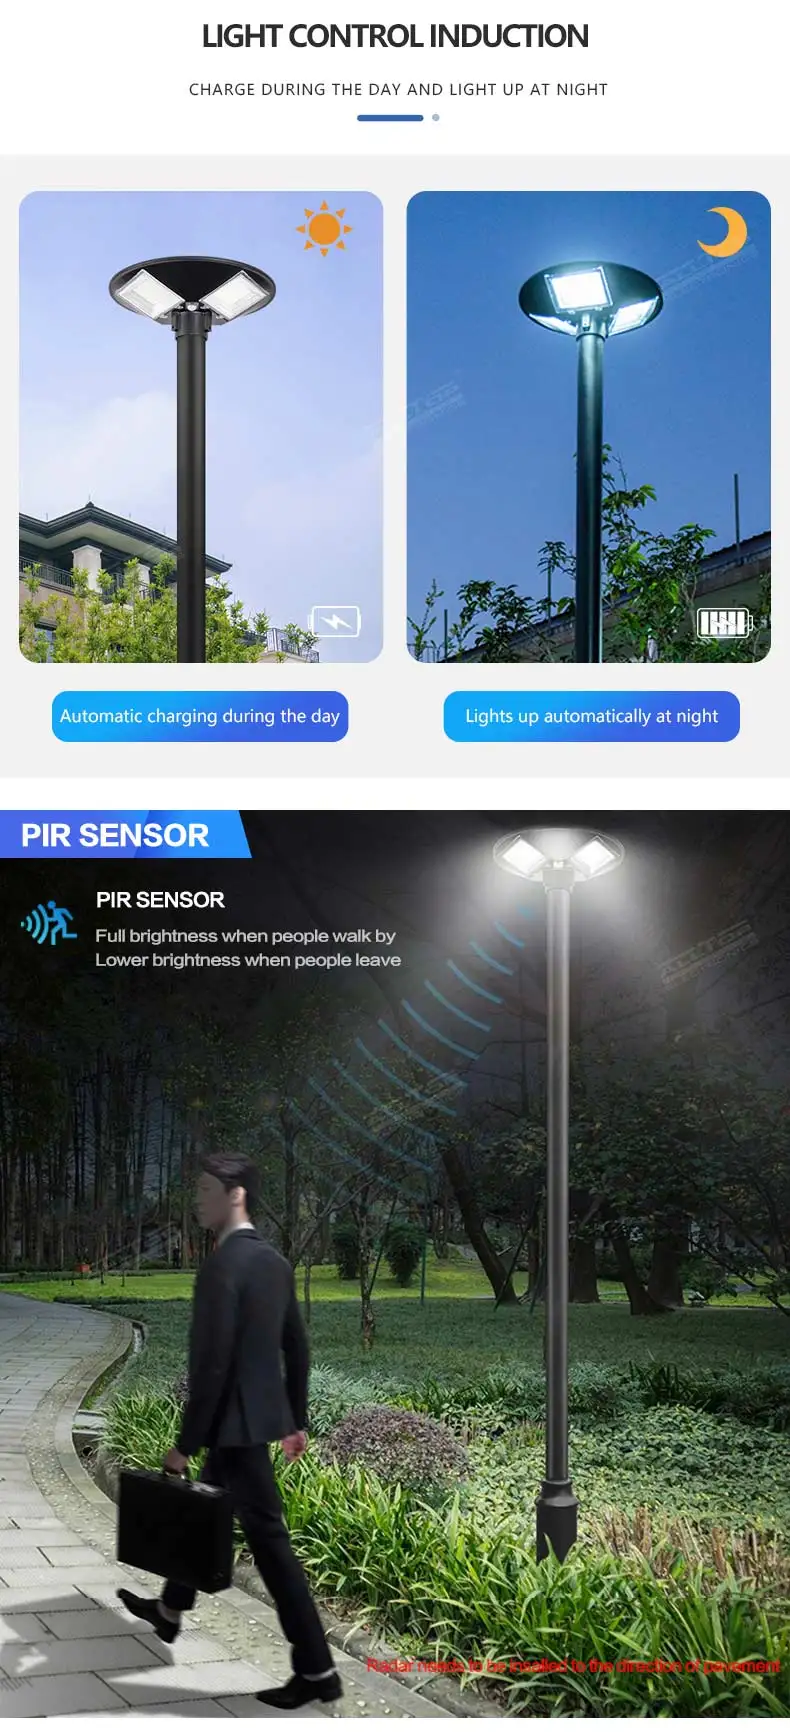 ALLTOP Energy saving modern garden light smd integrated waterproof 300 500 W solar light for garden